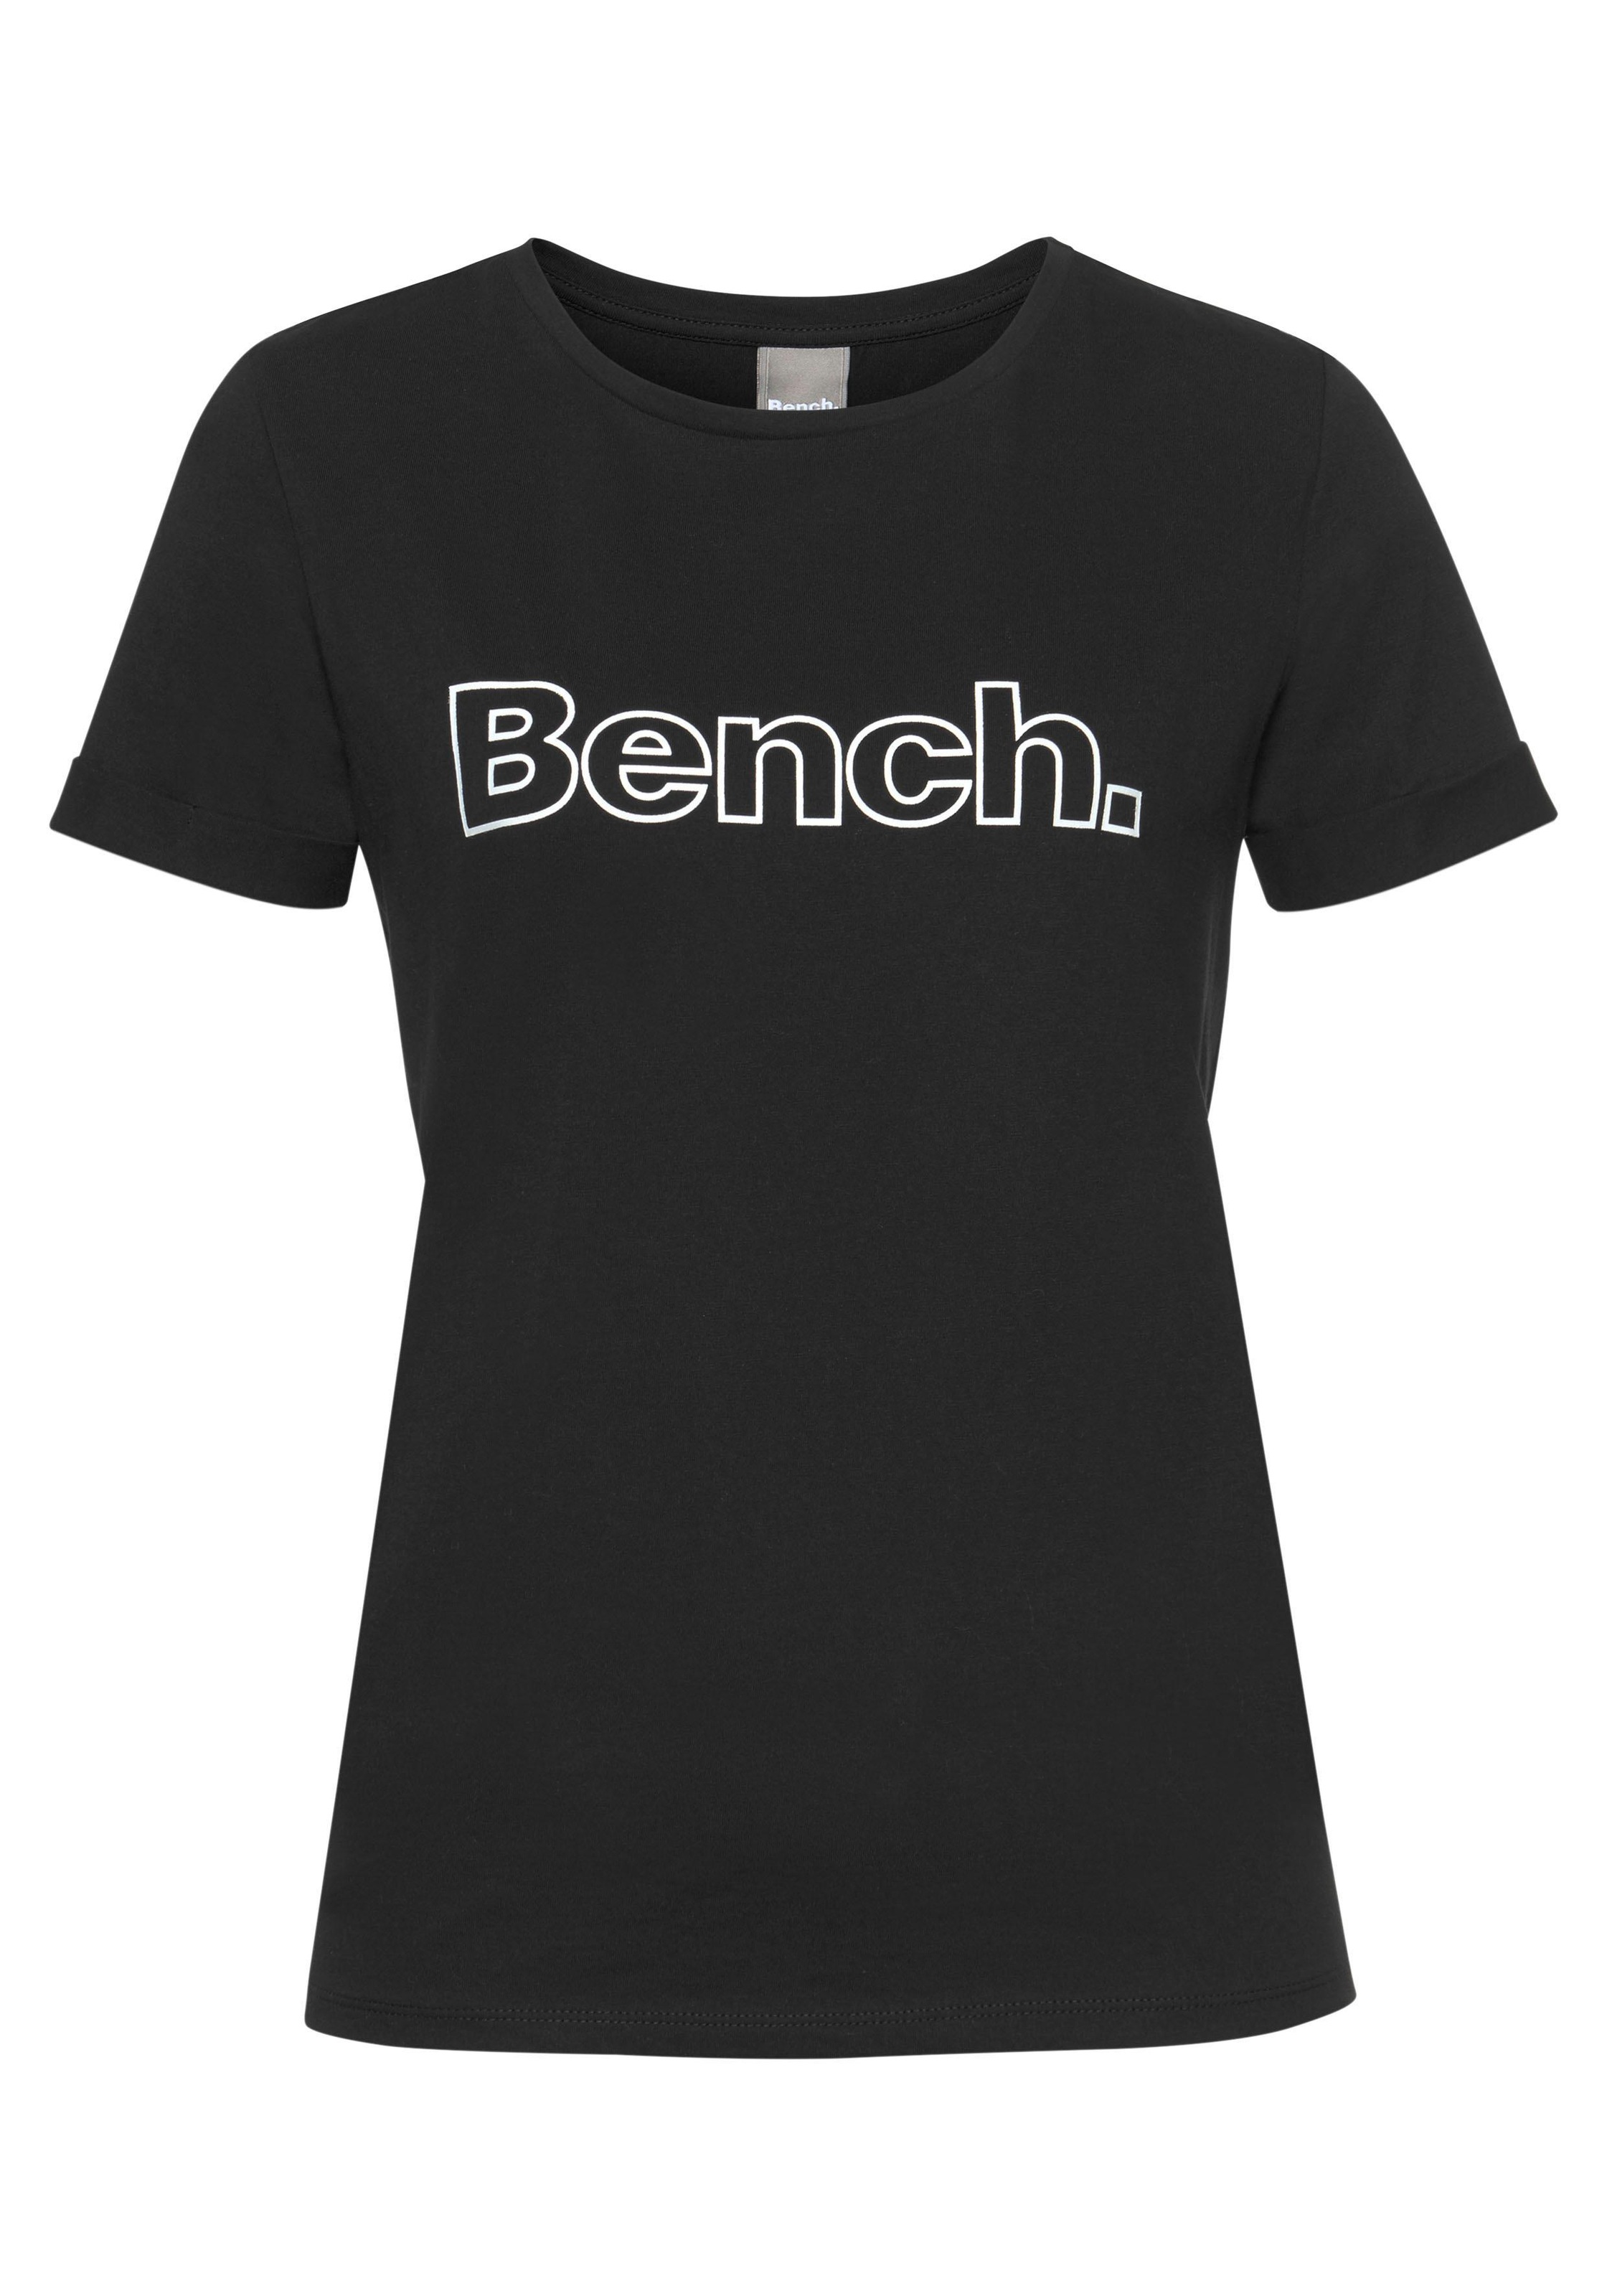 T-Shirt Bench. shoppen